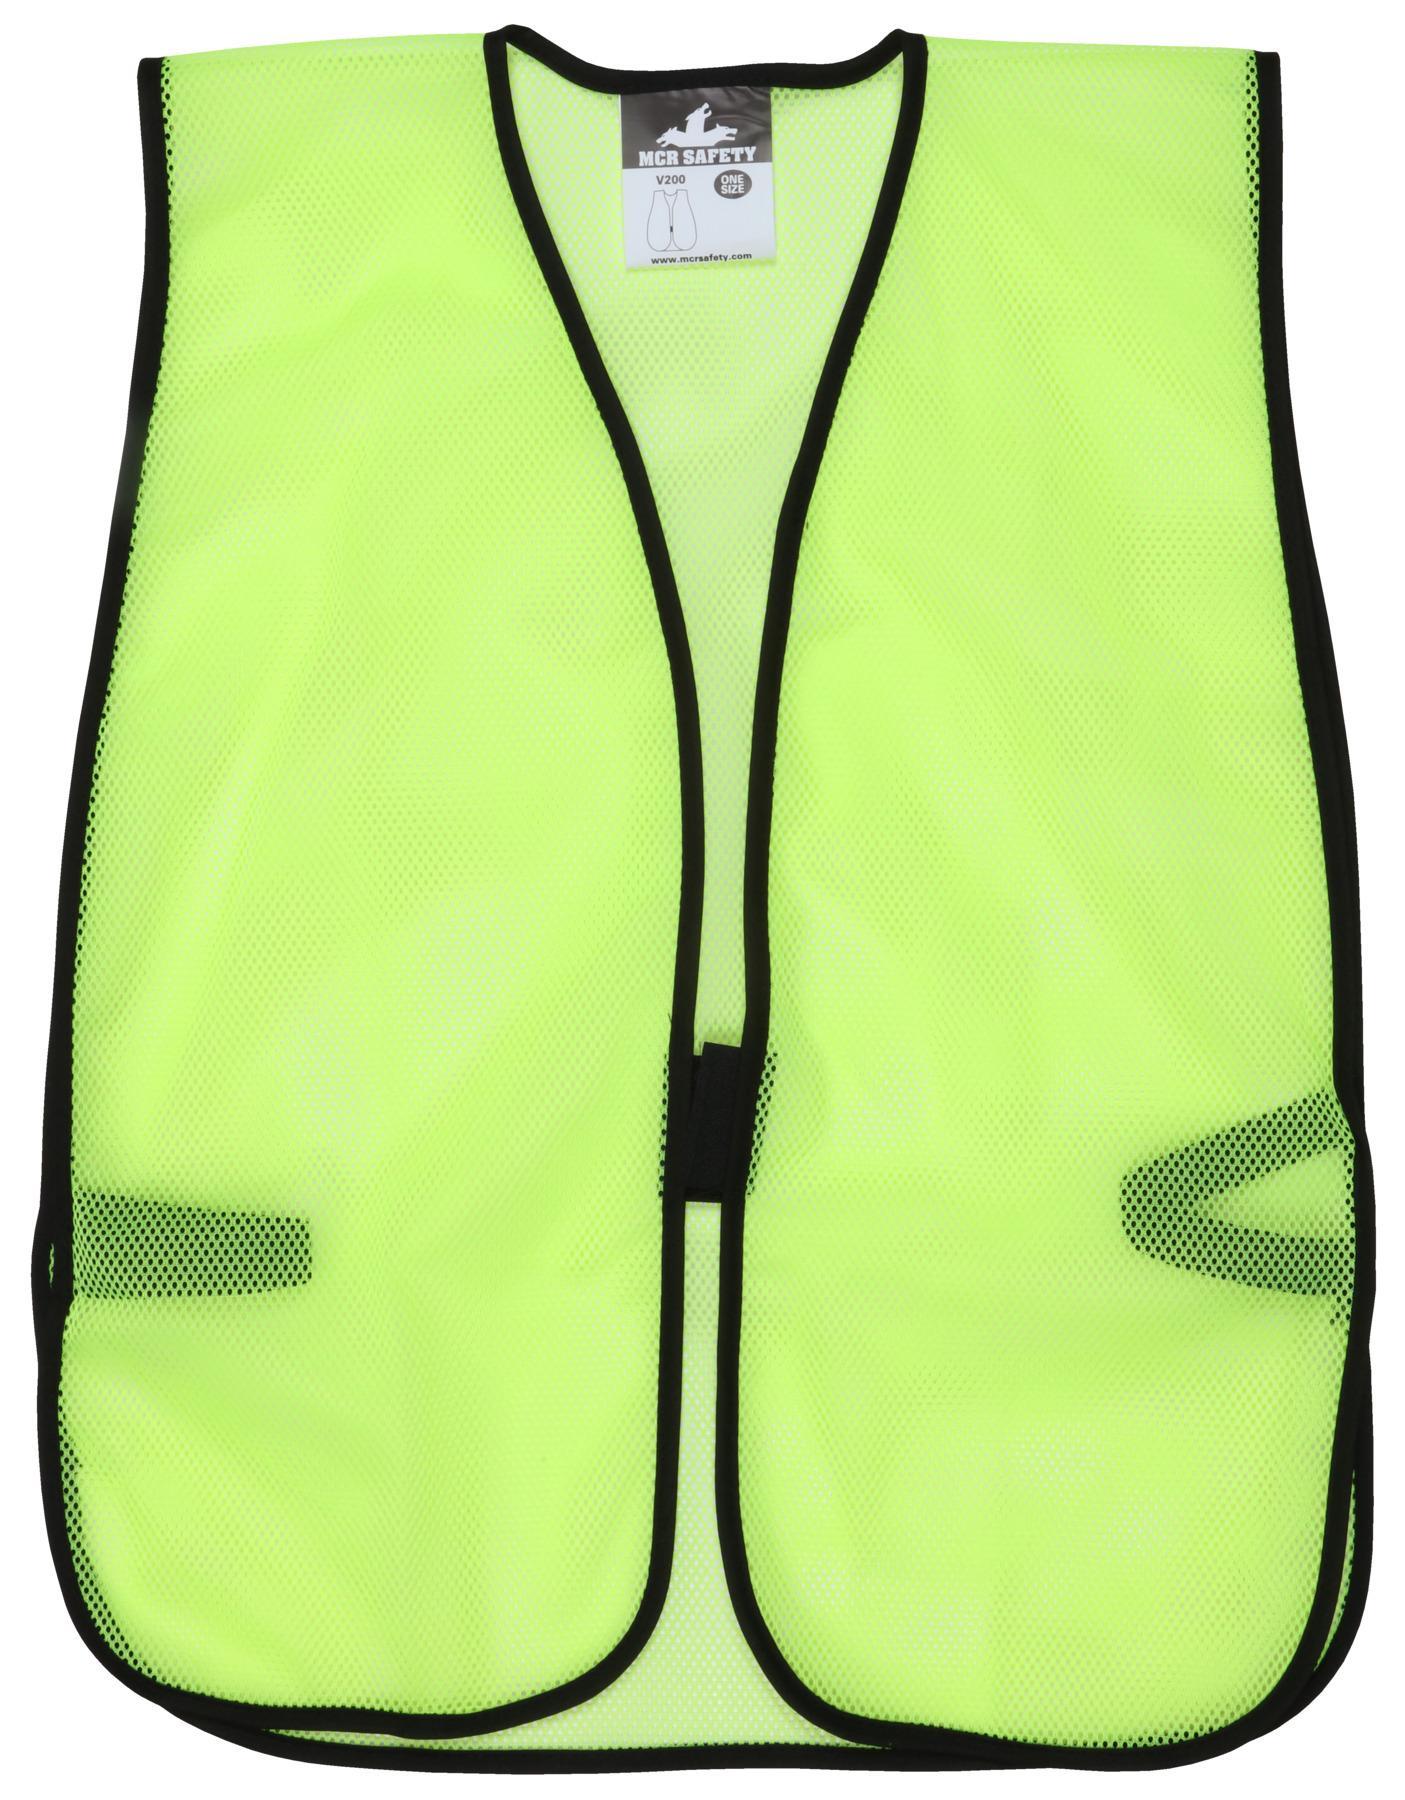 MCR Safety CL2MLPXL Luminator™ CL2MLP Safety Vest, XL, Hi-Viz Fluorescent Lime, Polyester Mesh, Zipper Closure, 2 Pockets, ANSI Class: Class 2, ANSI/ISEA 107-2015 Type R